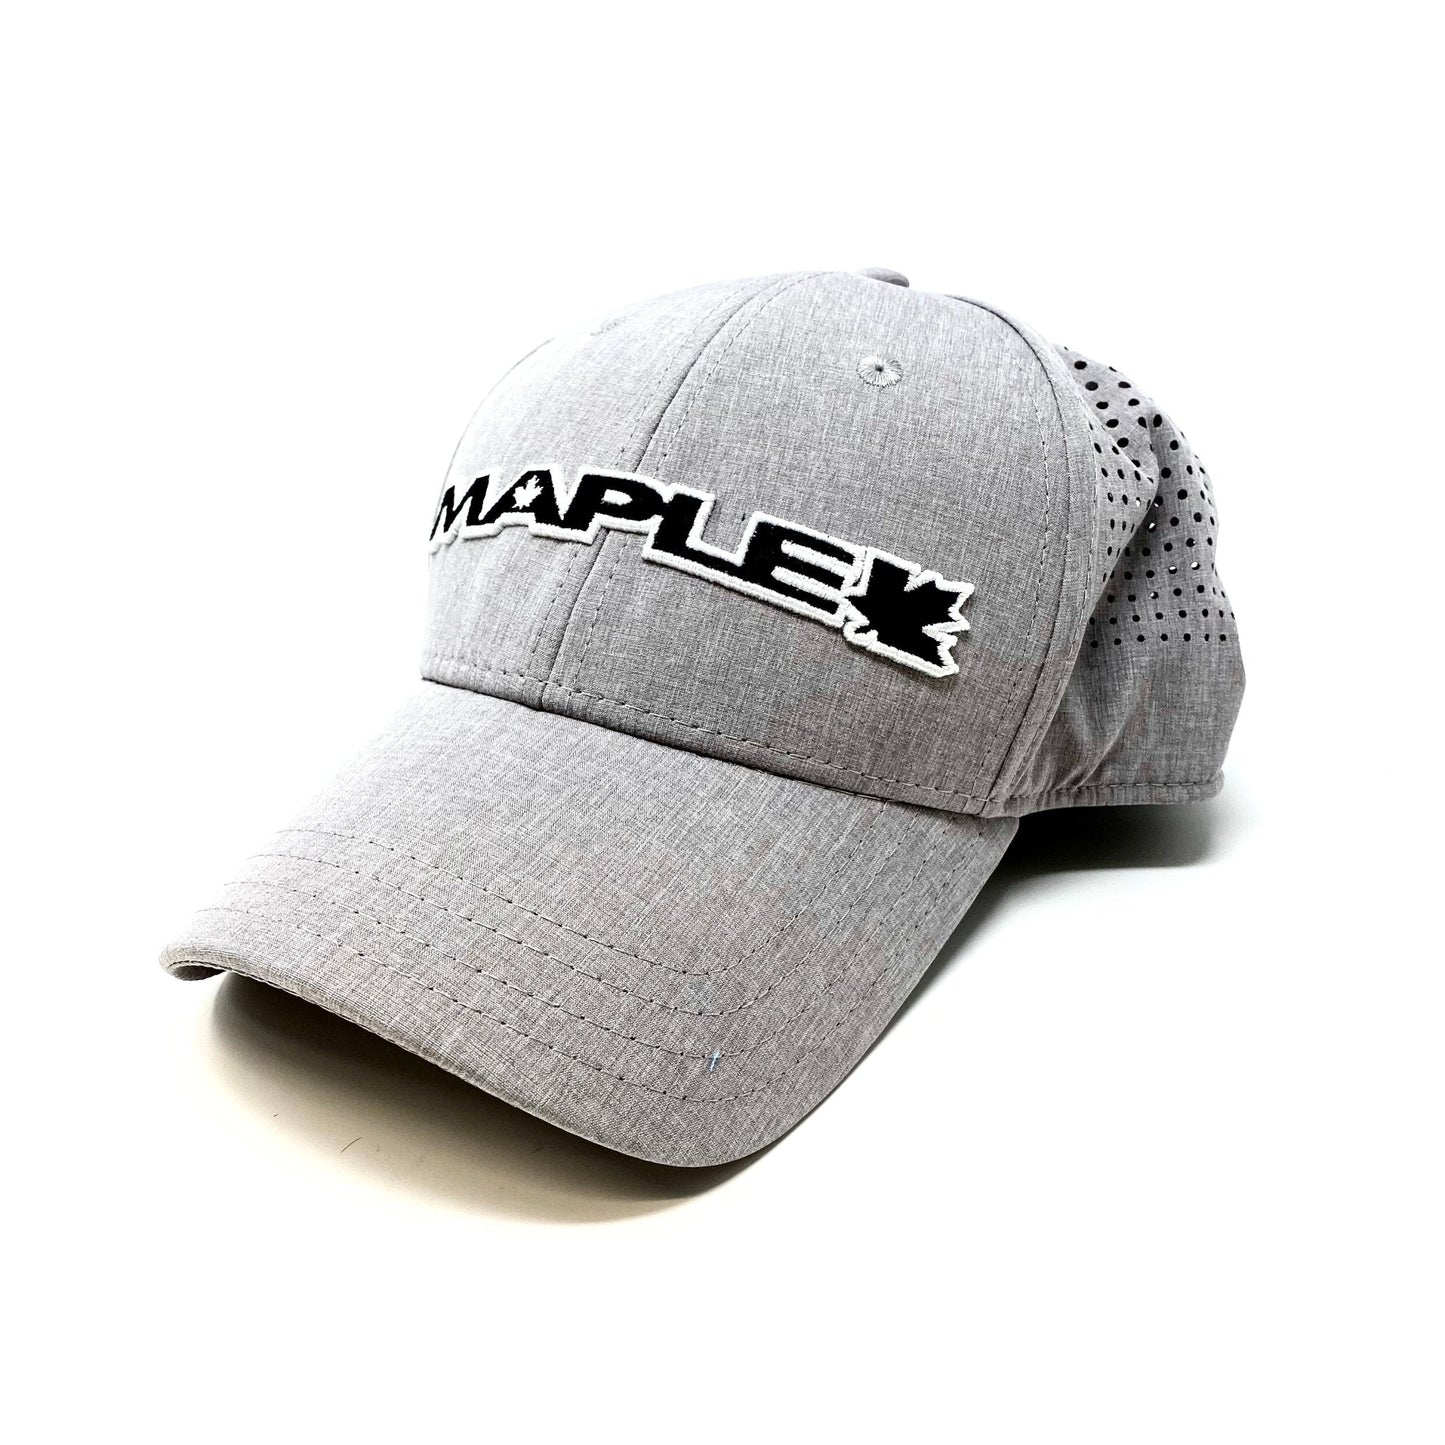 Maple Logo Beyond Trucker Cap - Ride Maple